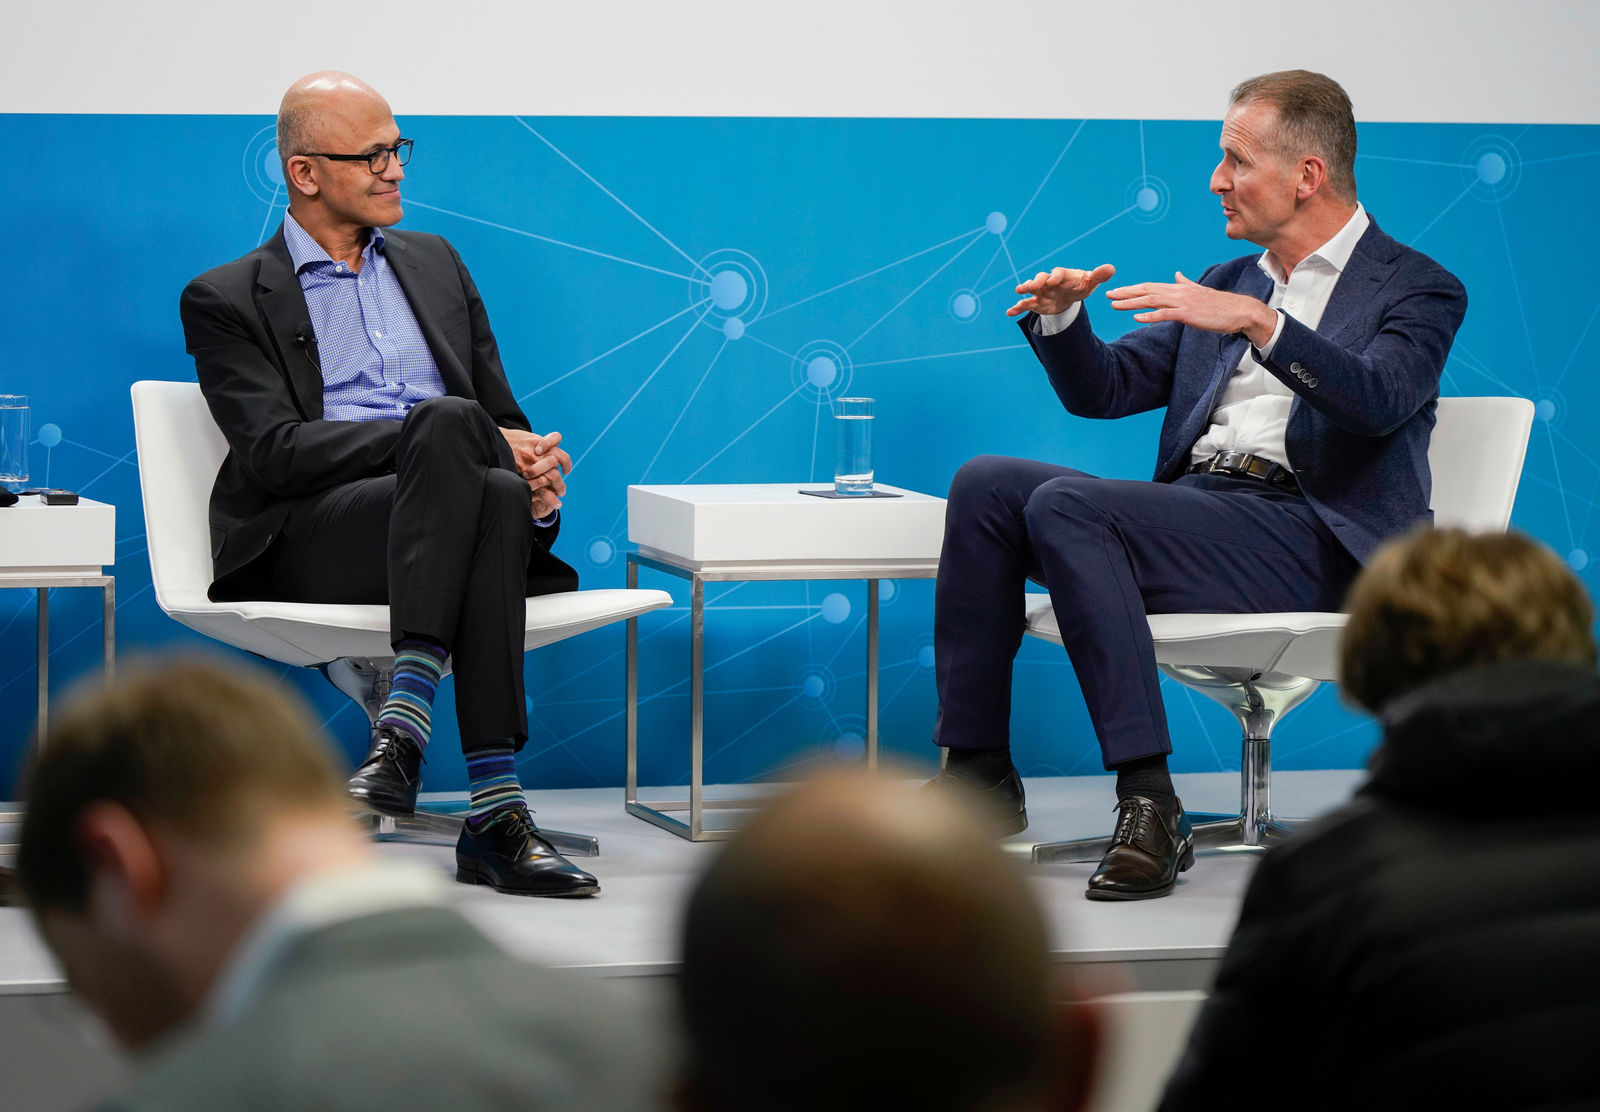 Volkswagen and Microsoft share progress on strategic partnership